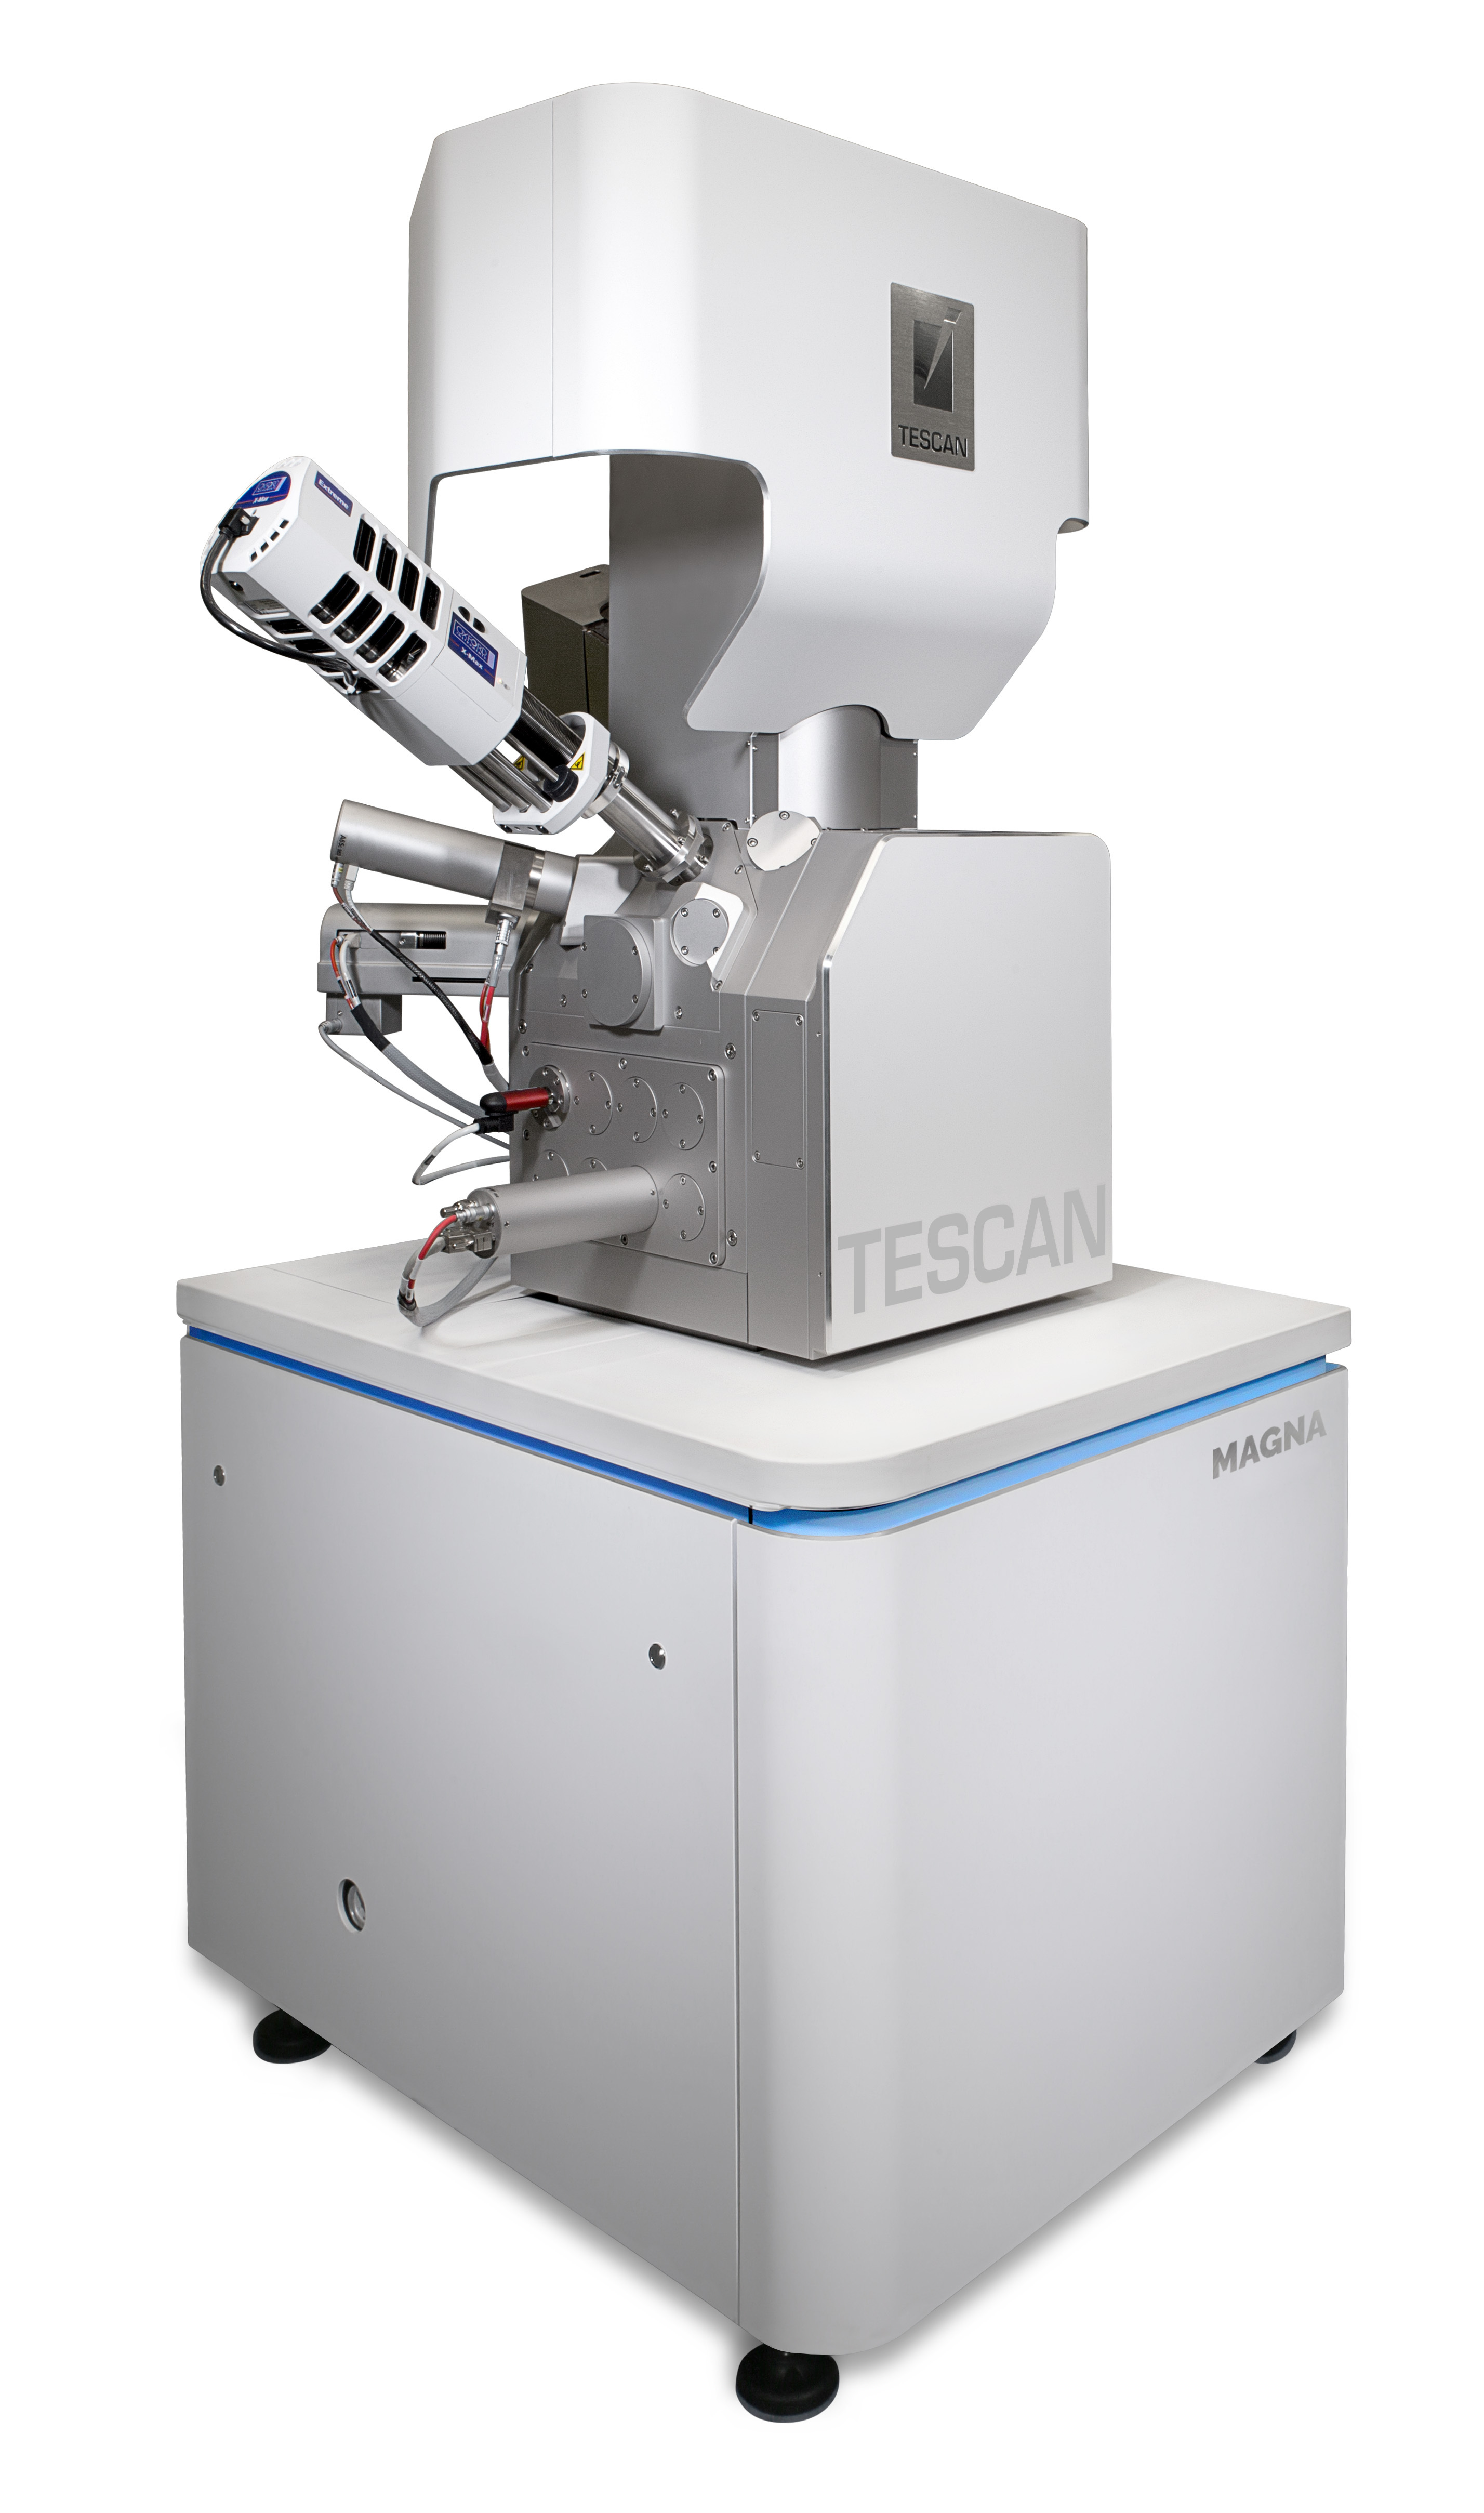 TESCAN MAGNA 新一代超高分辨场发射扫描电镜